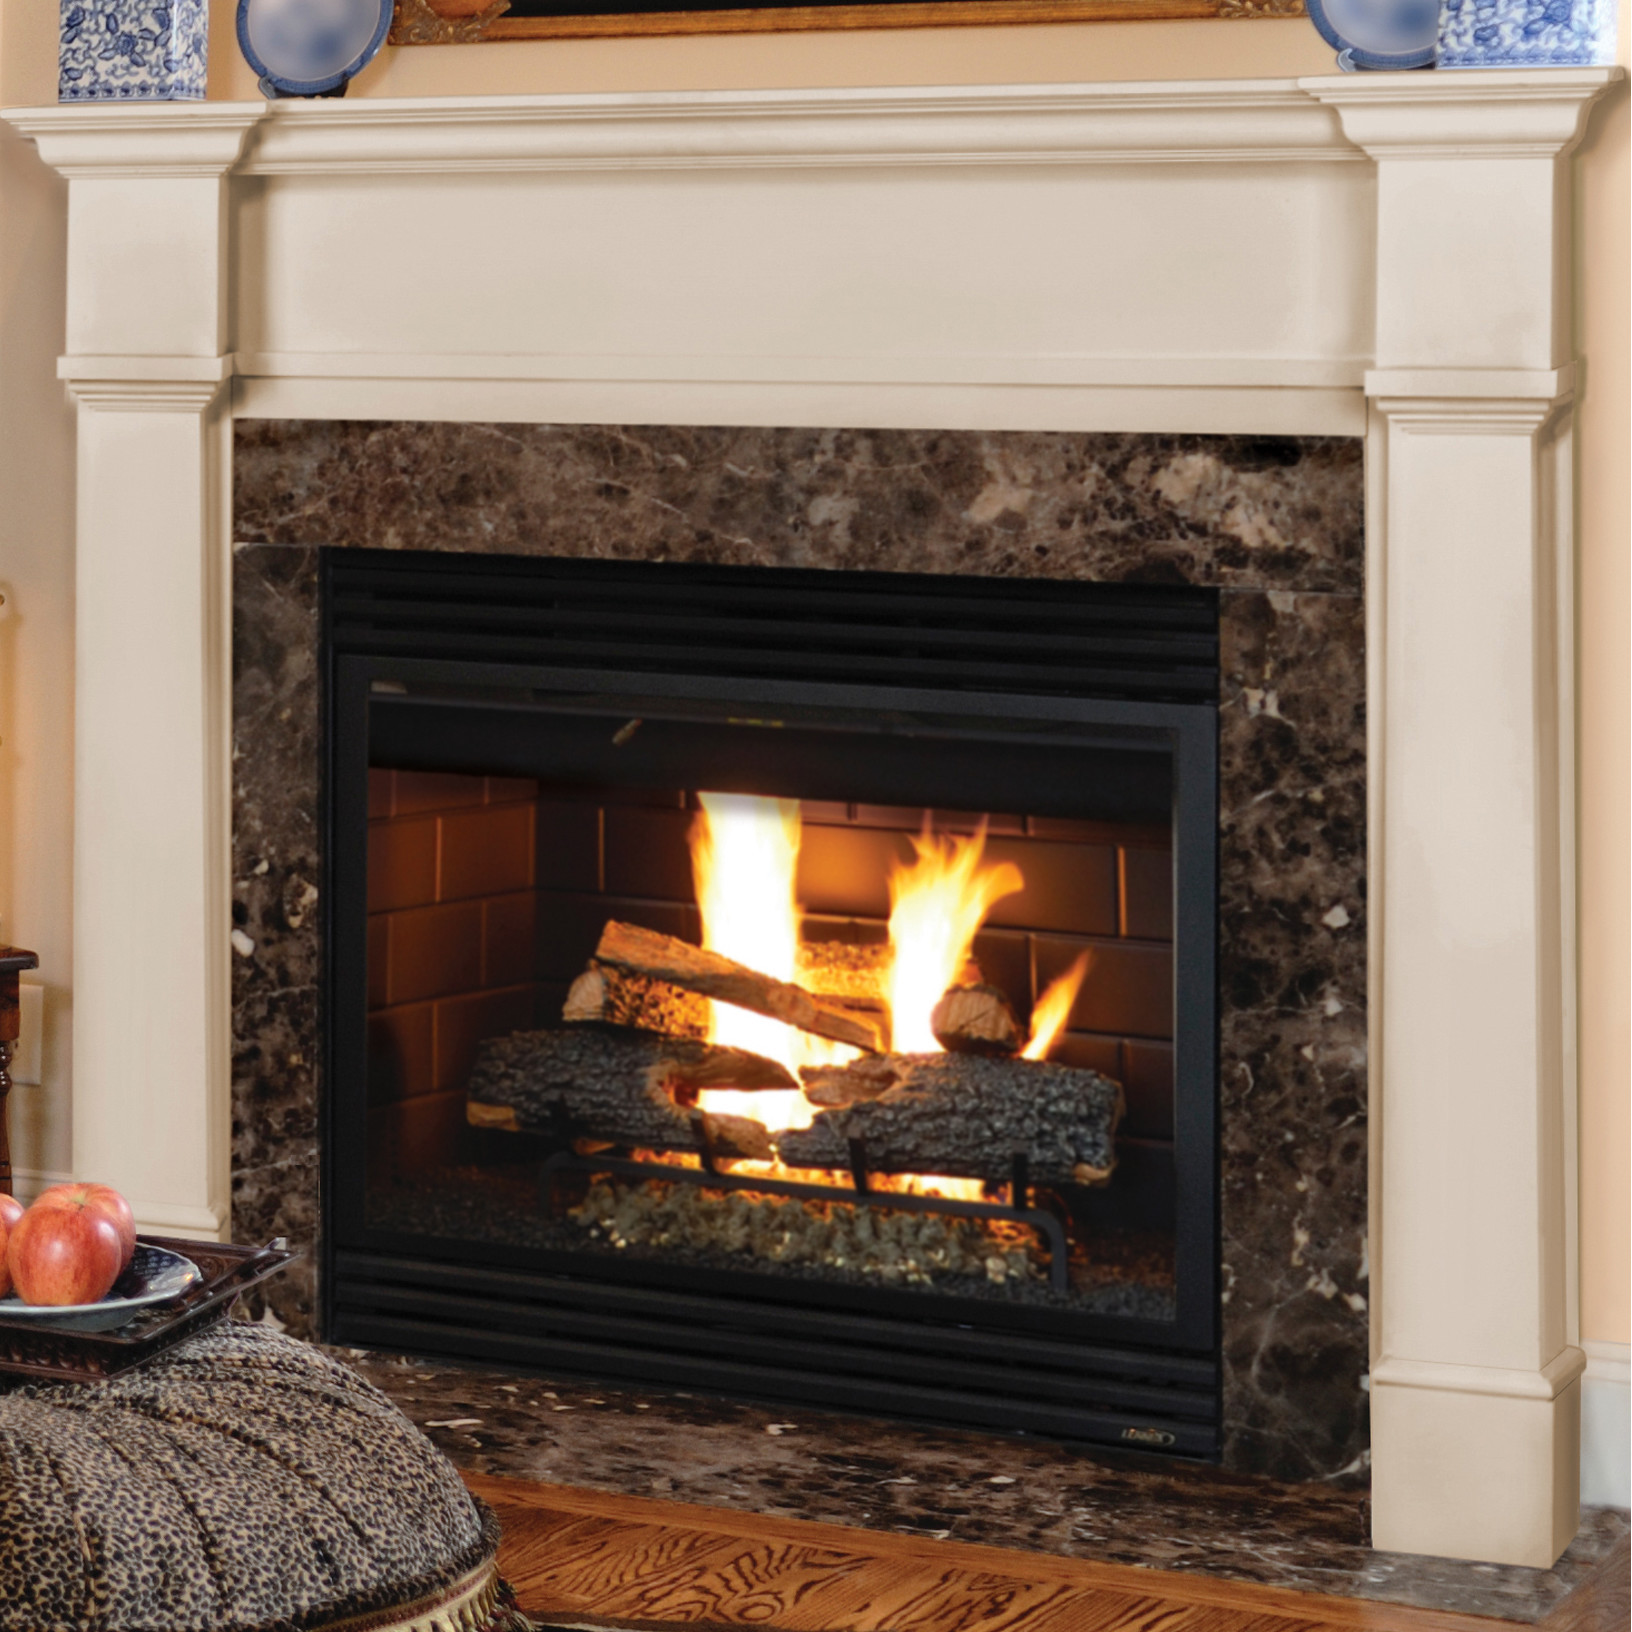 Best ideas about Fireplace Mantel Surrounds
. Save or Pin Pearl Mantels Richmond Fireplace Mantel Surround & Reviews Now.